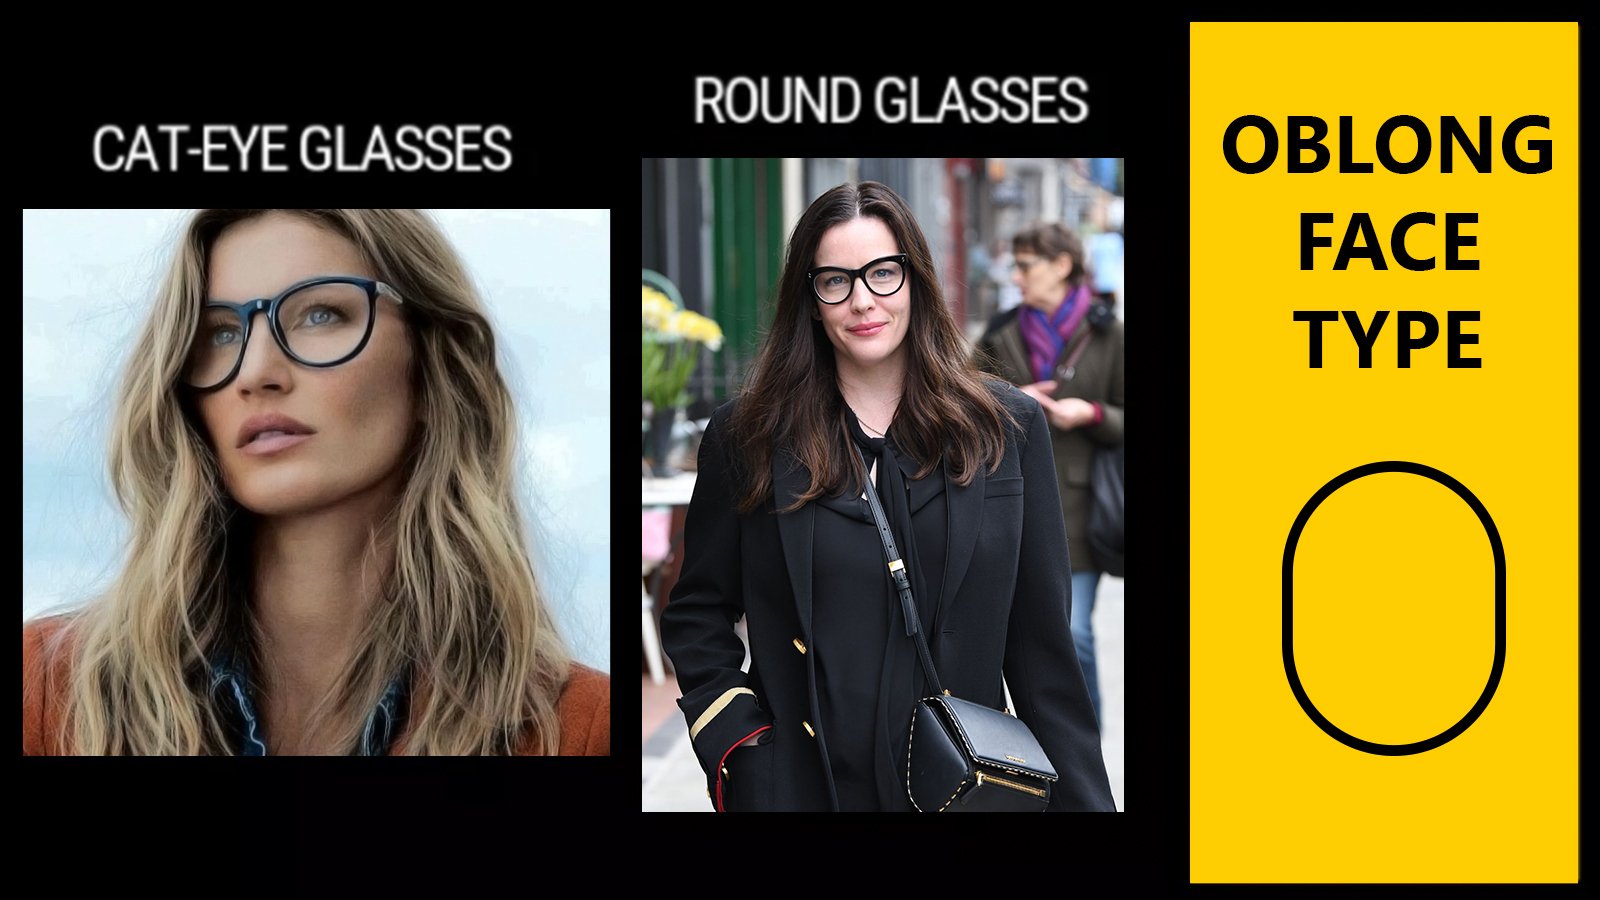 Celebrities with oblong faces: Liv Tyler, Gisele Bundchen: